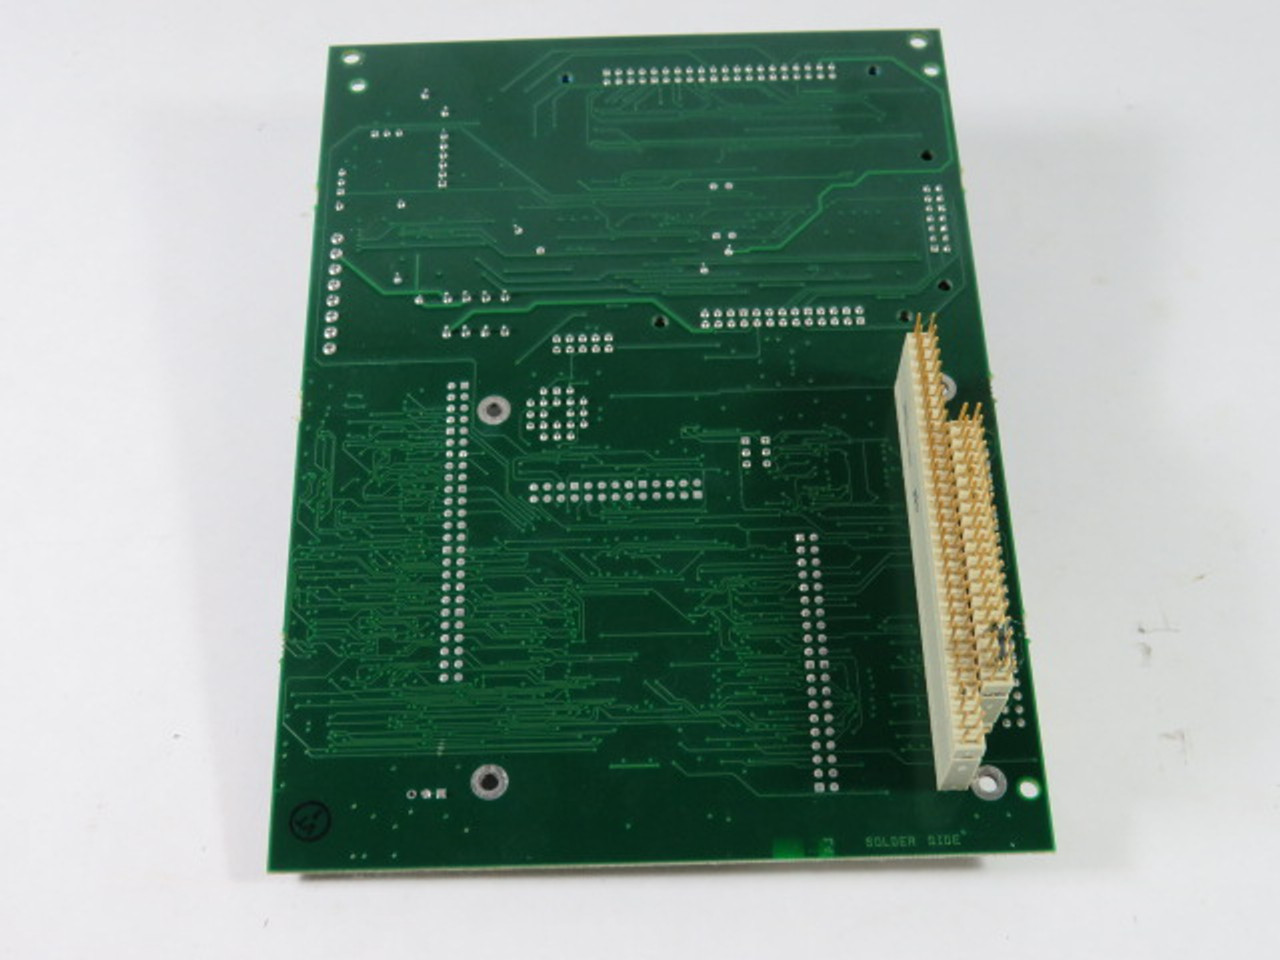 Markem Corp 2085115 Imaging Circuit Board USED